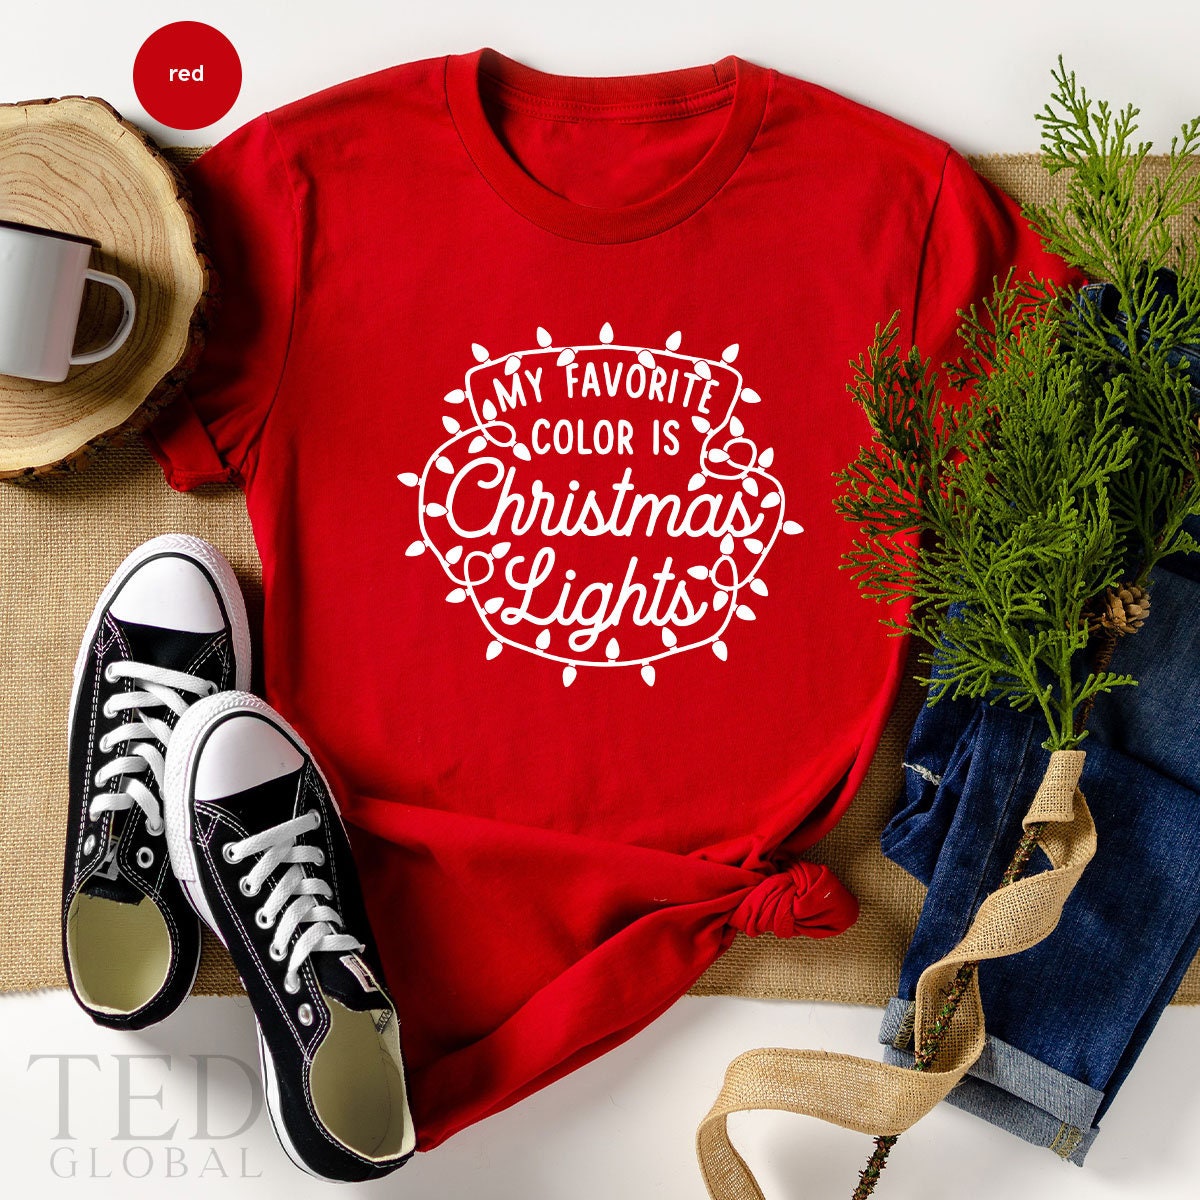 Cute Christmas Saying  T-Shirt, Funny Sarcasm T Shirt, My Favorite Color Is Christmas Lights Shirts, Family Shirt, Gift For Christmas - Fastdeliverytees.com